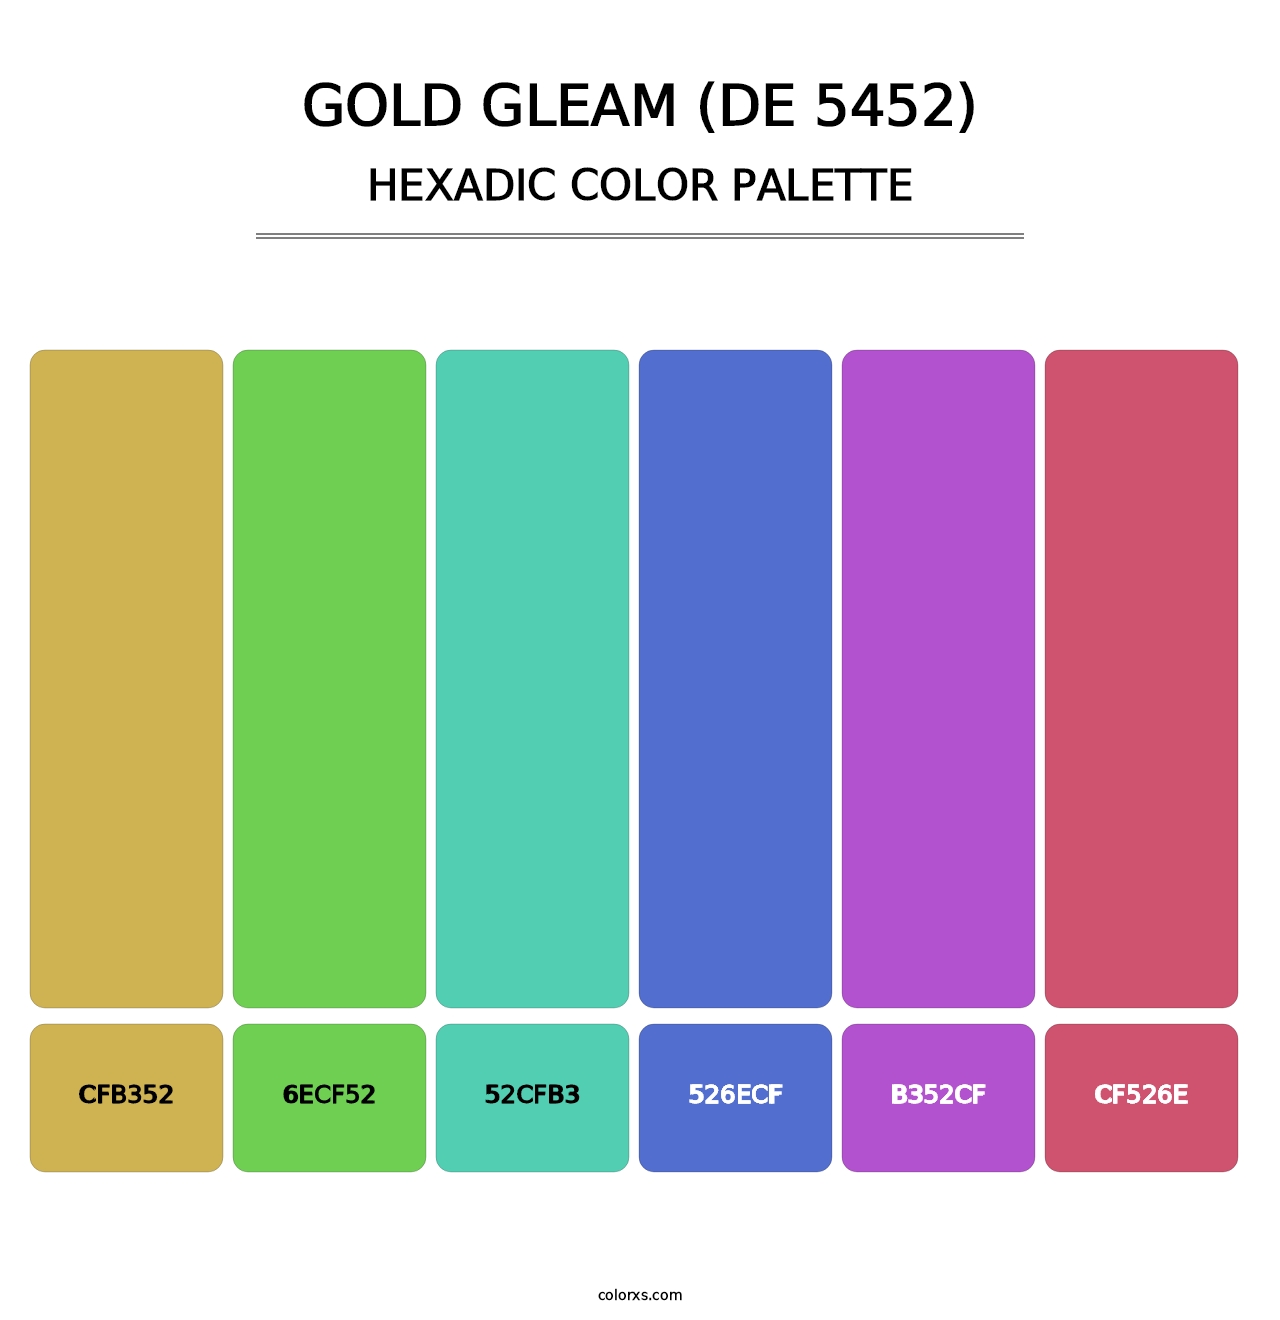 Gold Gleam (DE 5452) - Hexadic Color Palette